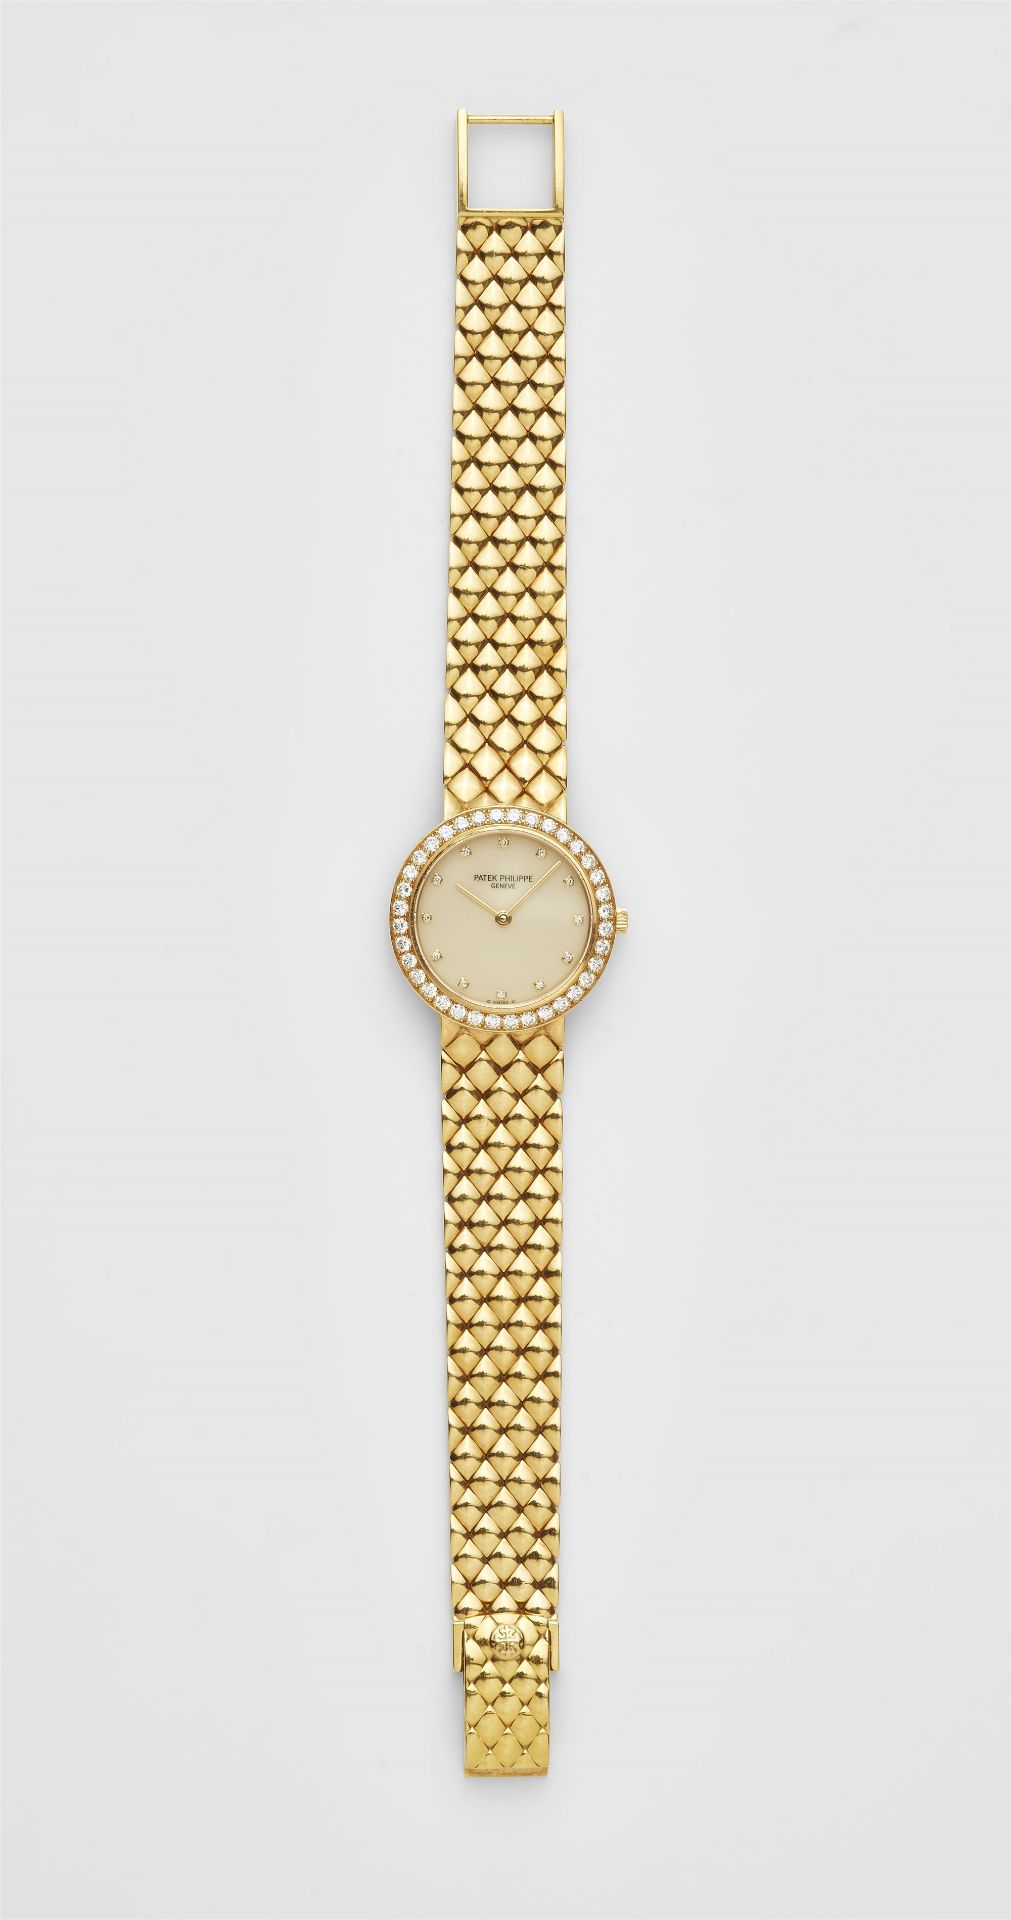 An 18k yellow gold and diamond quartz Patek Philippe ladies' wristwatch. - Image 3 of 3